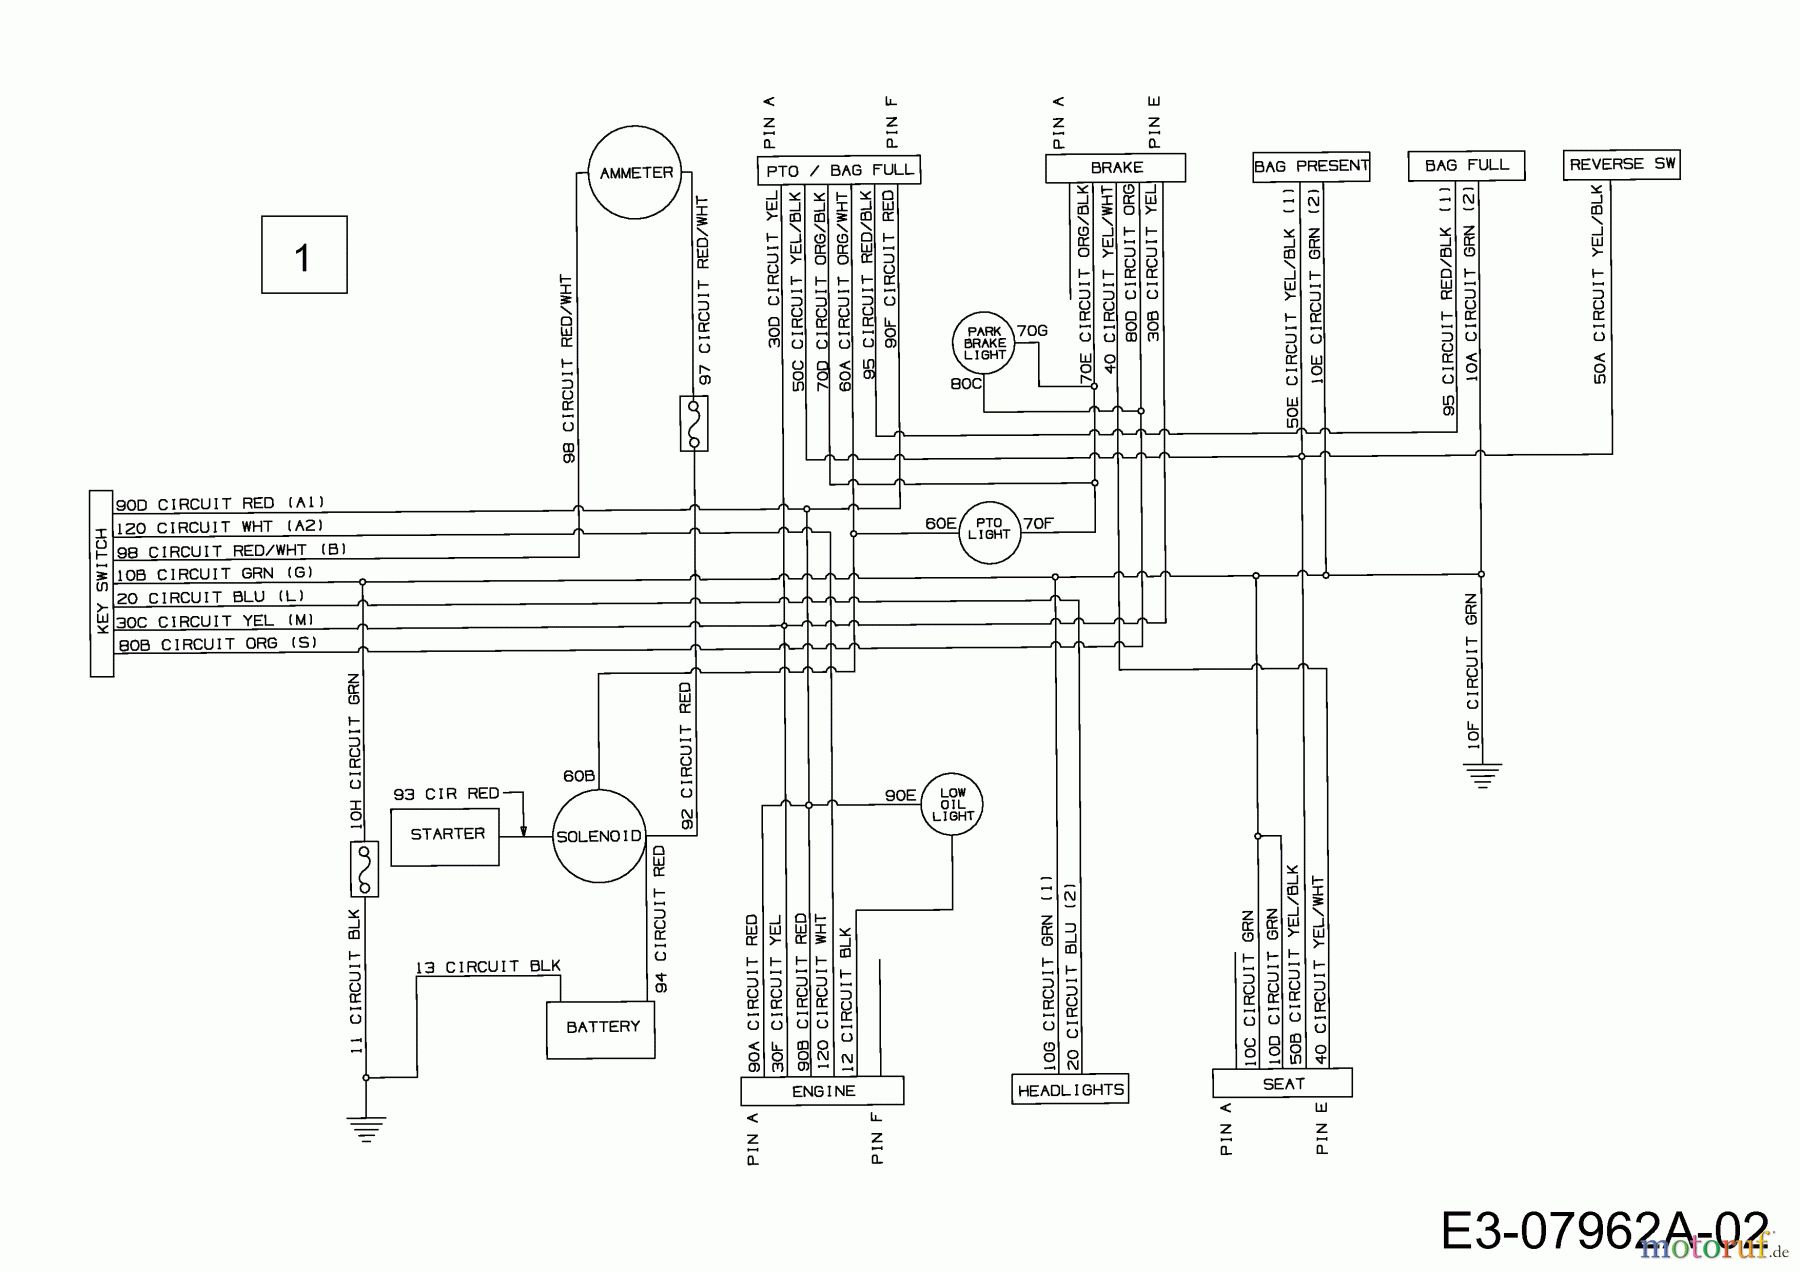  Fleurelle Lawn tractors AMH 1650 13B5509N619  (2003) Wiring diagram